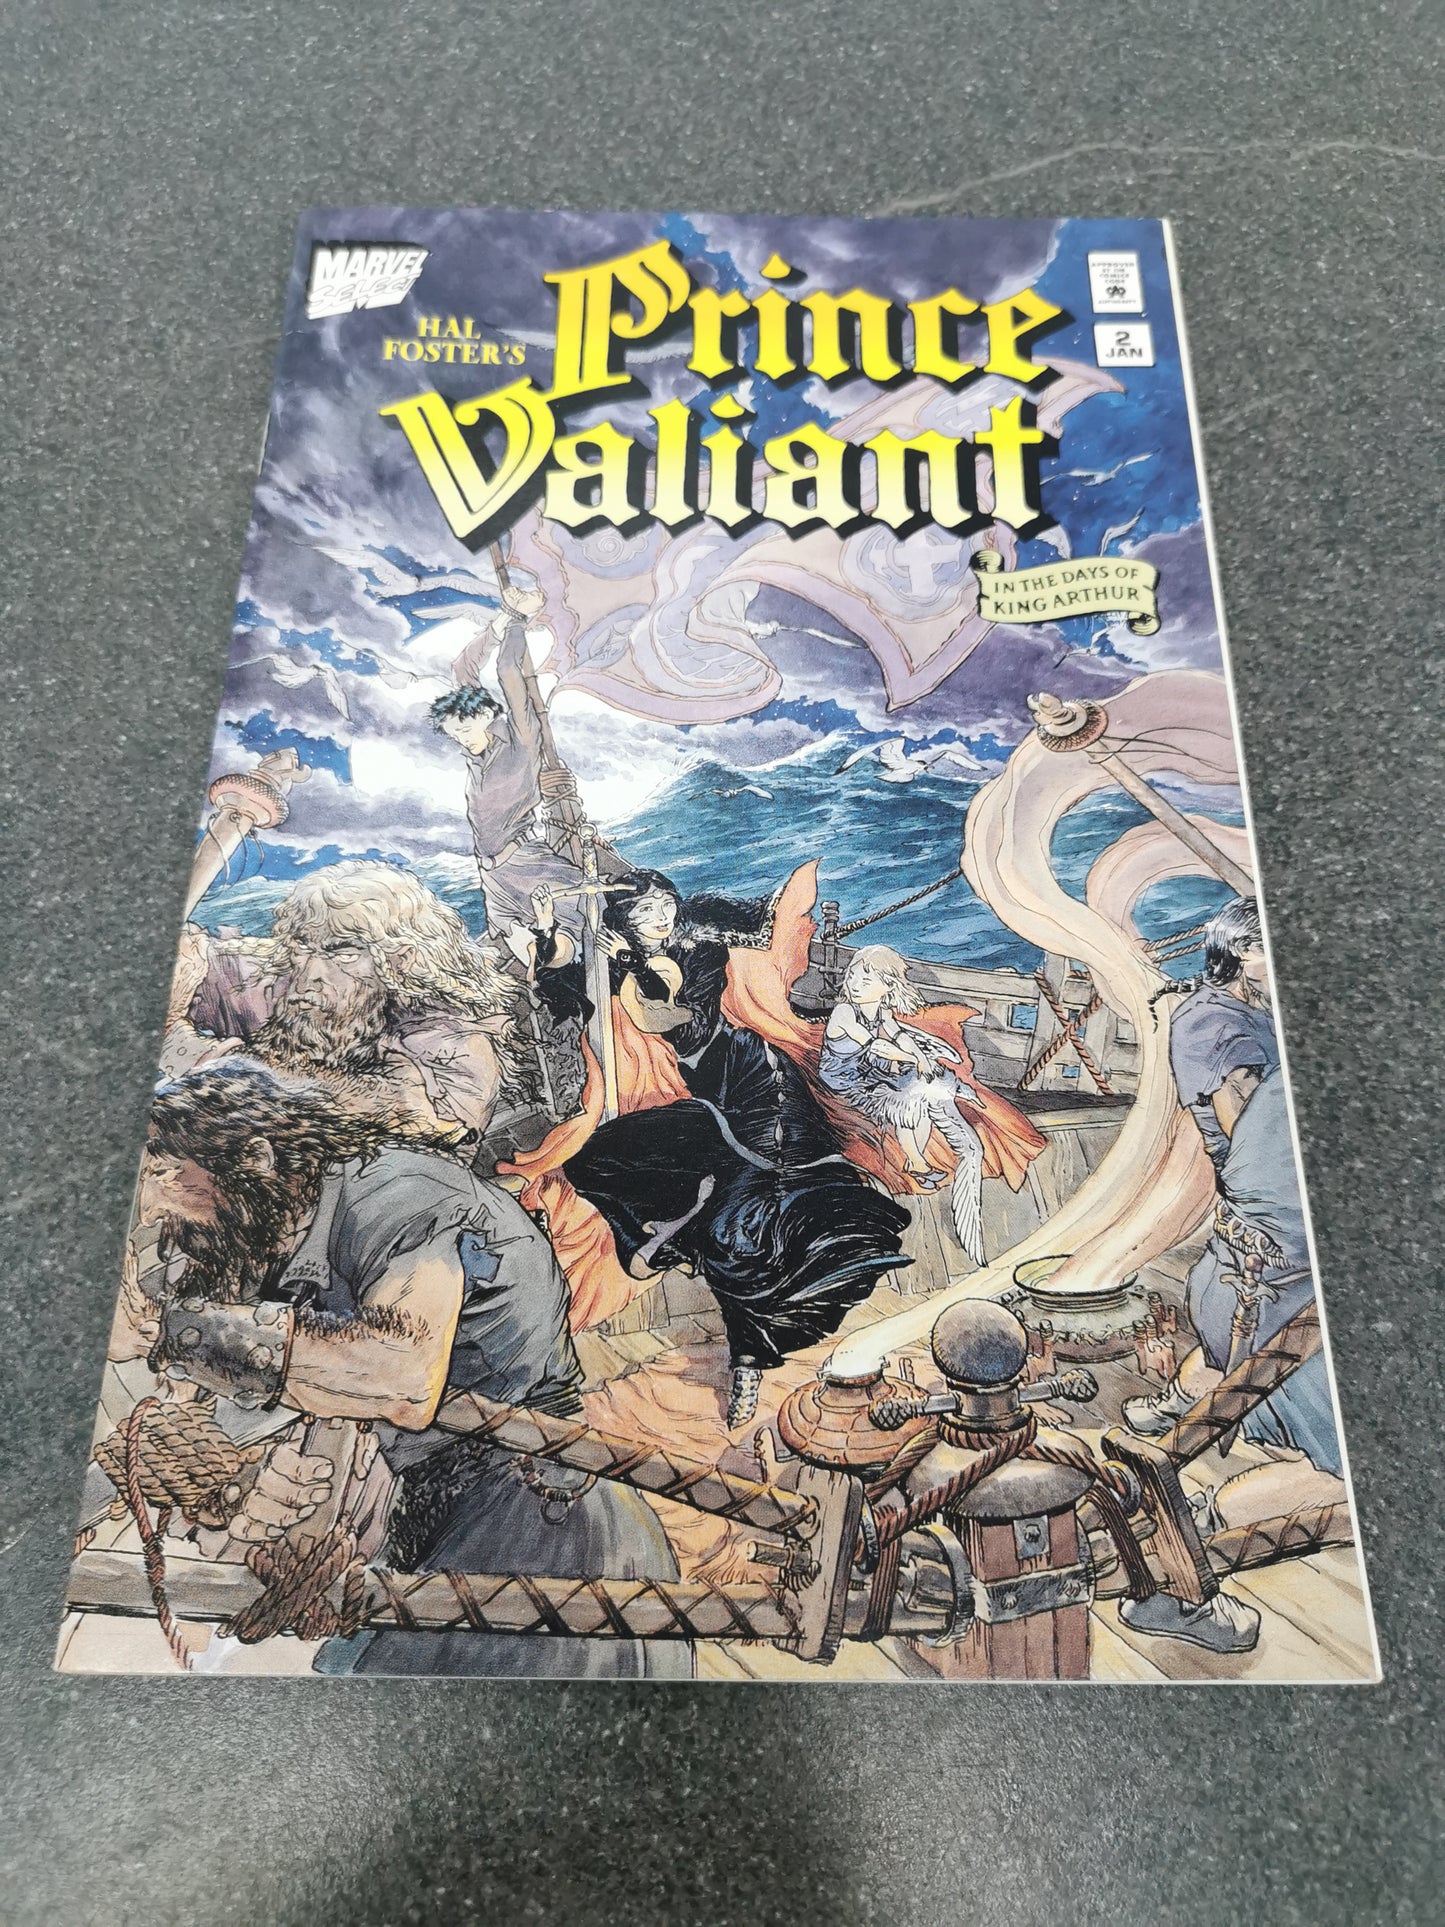 Prince Valiant #2 1995 Marvel comics